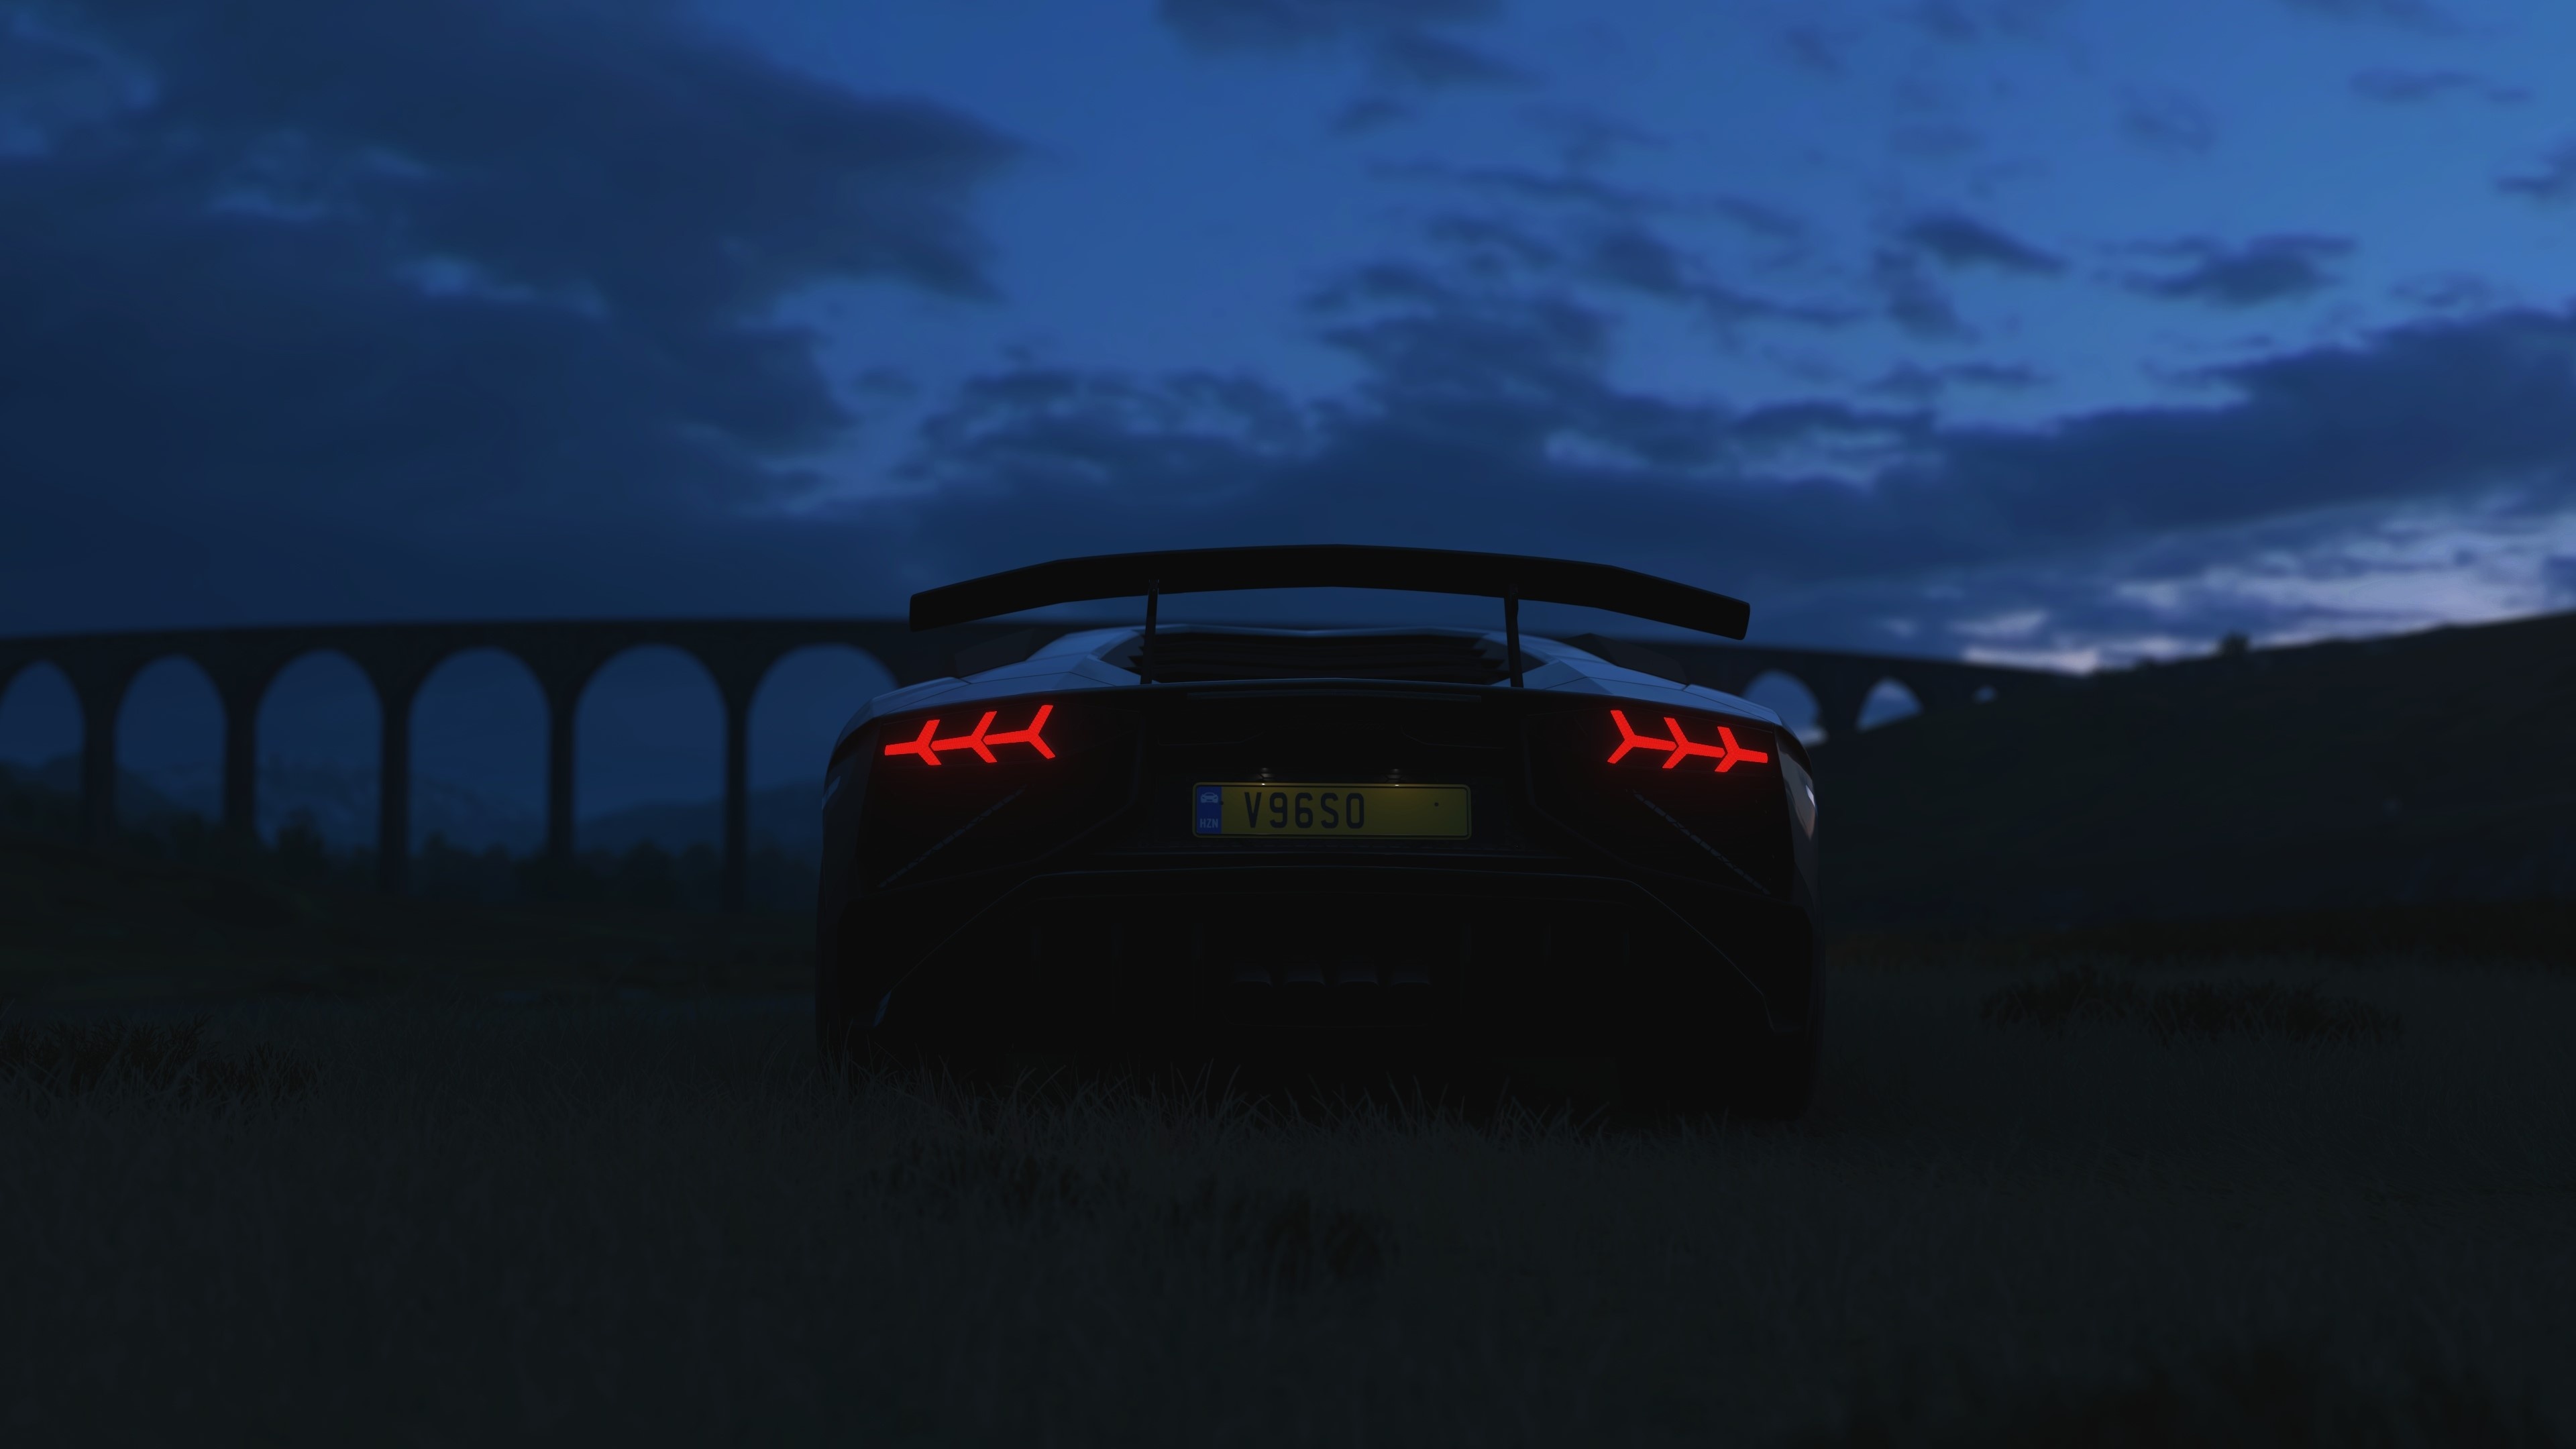 SVJ Forza Horizon 4, Lamborghini Aventador Wallpaper, 3840x2160 4K Desktop